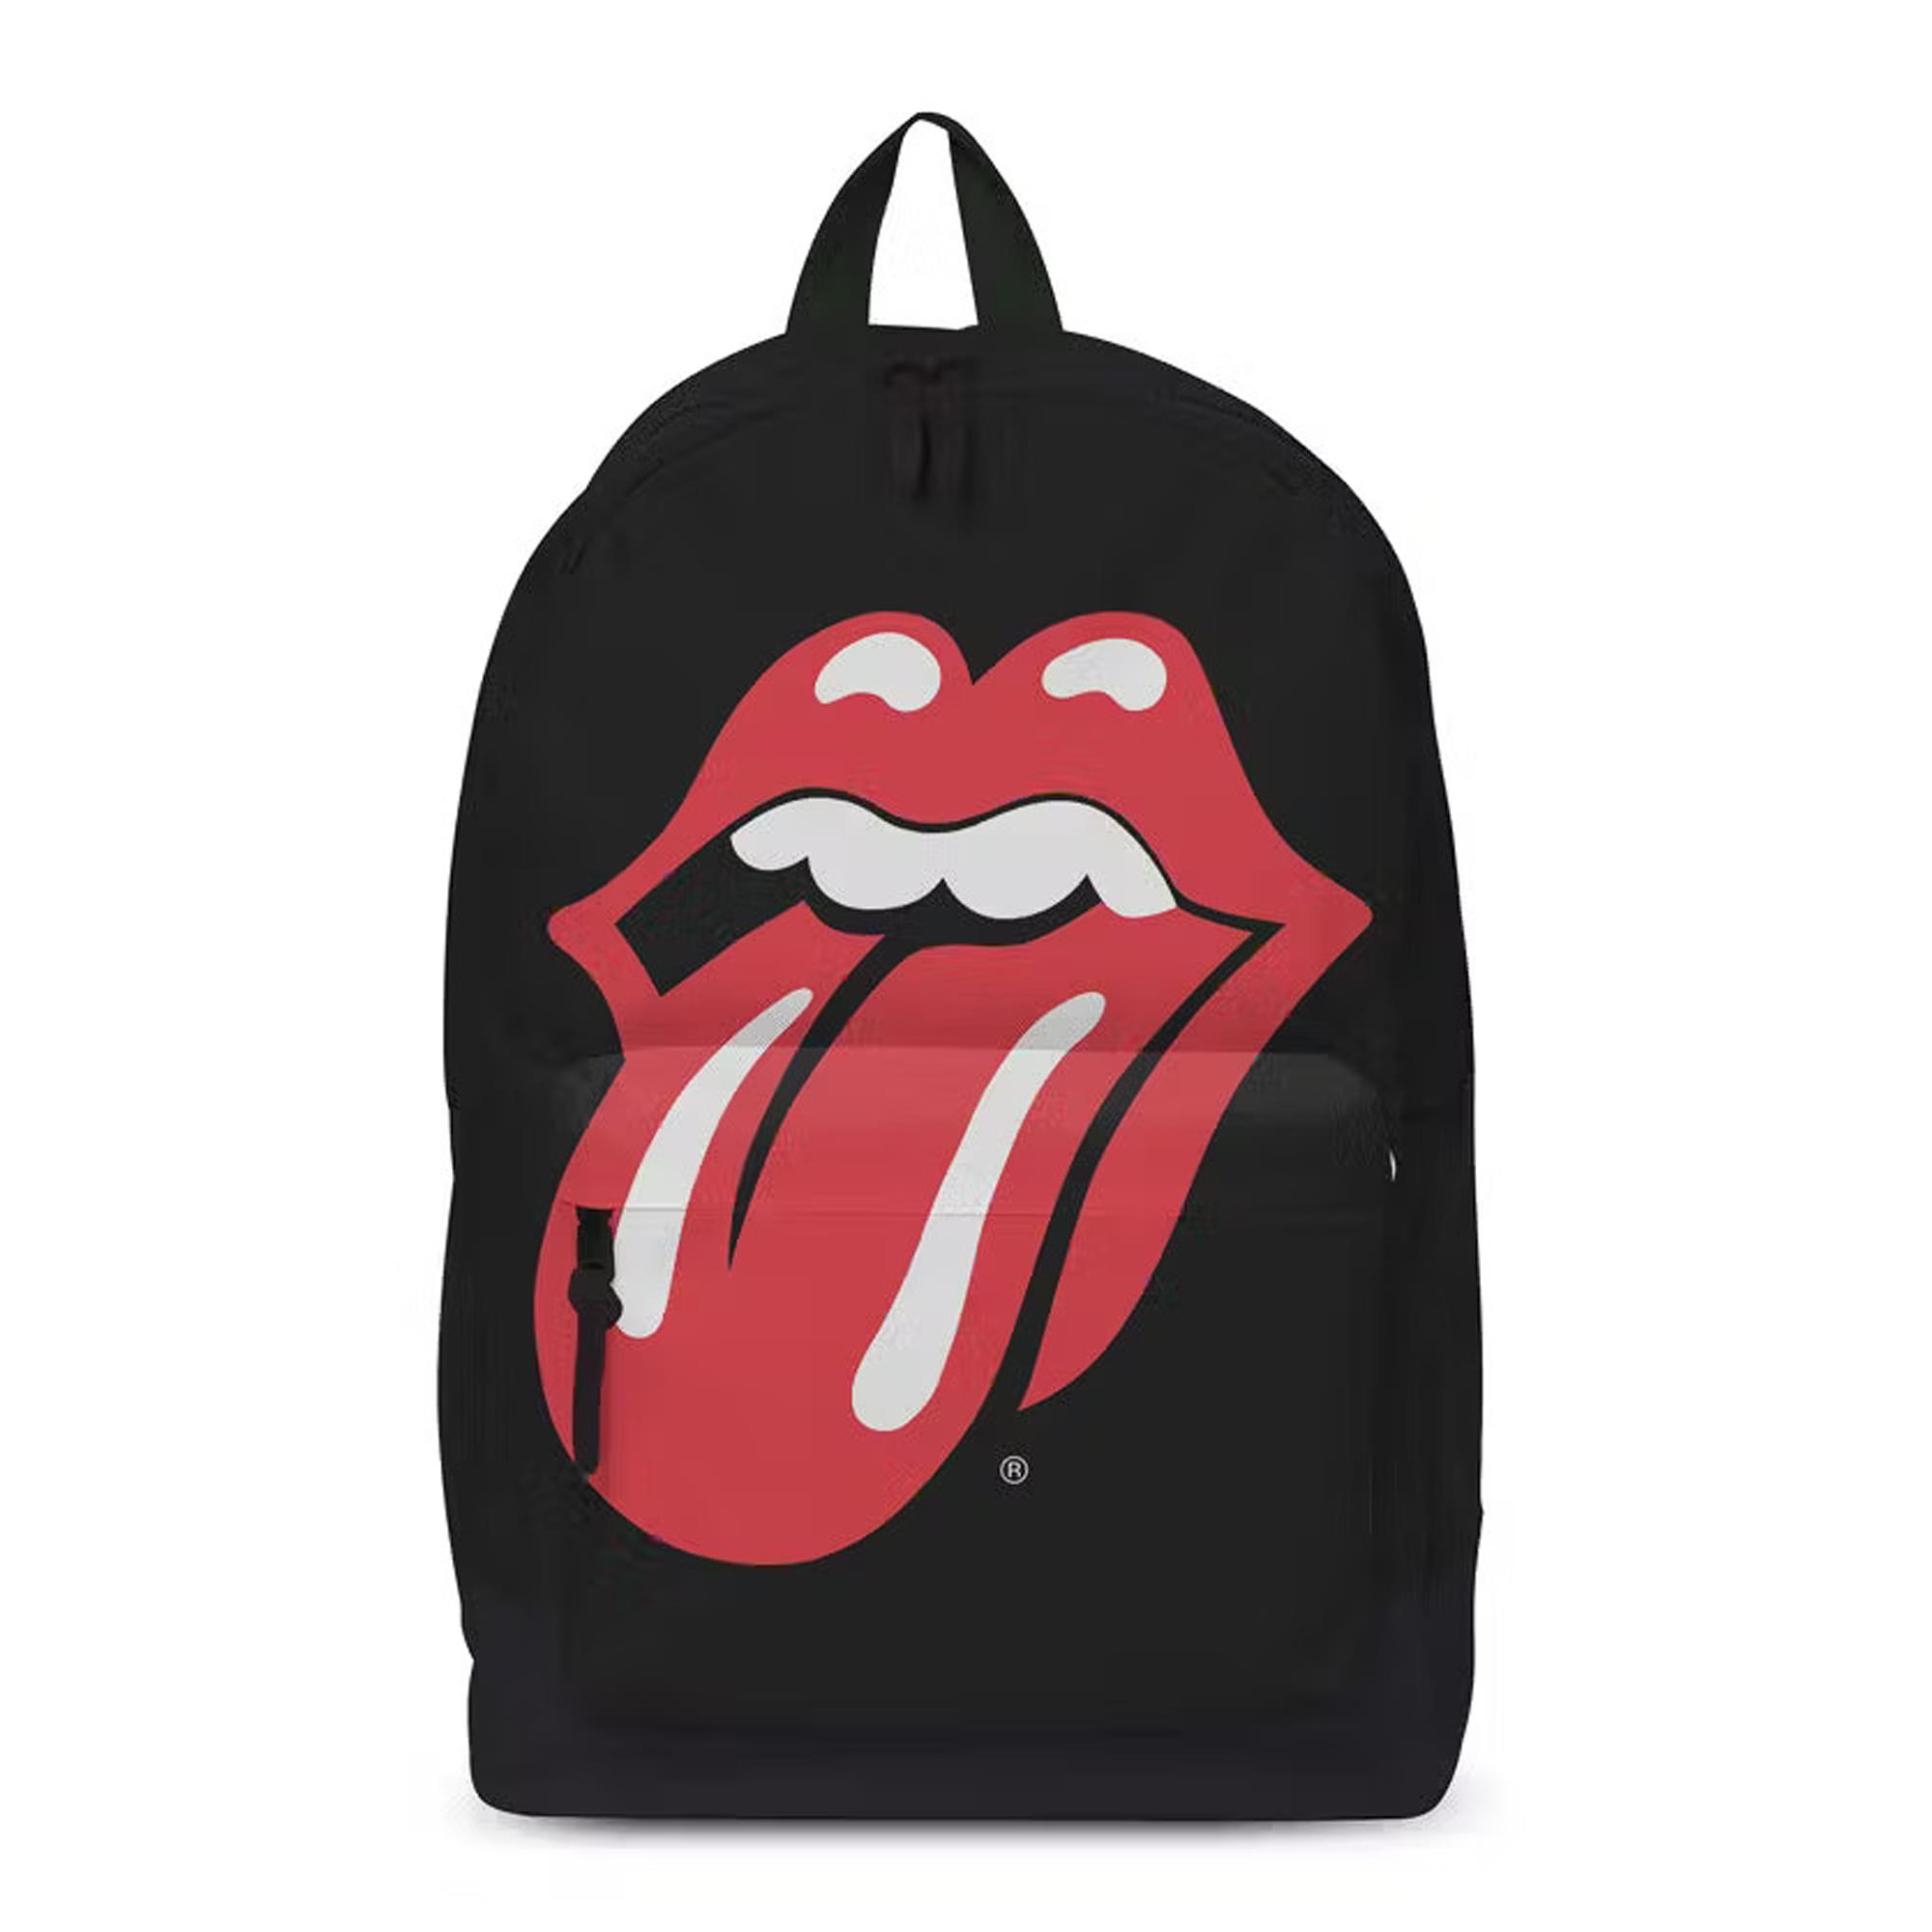 Tongue Backpack